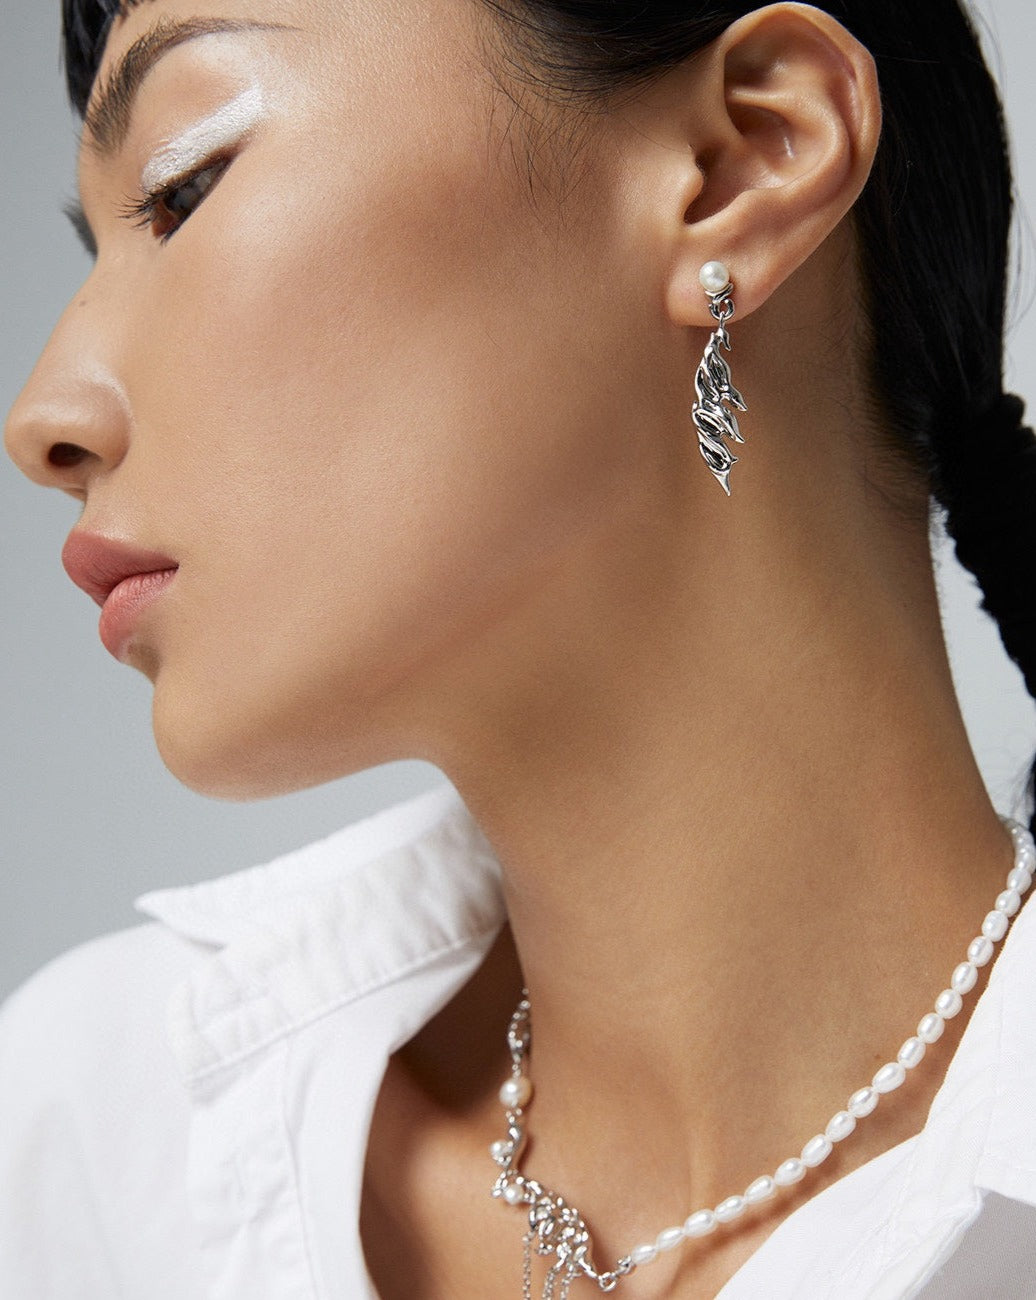 fashion-jewelry-minimalist-jewelry-design-jewelry-statement-necklace-pearl-earring-bracelet-rings-gold-coated-silver-bijoux-feather-in-the-wind-pearl-earrings